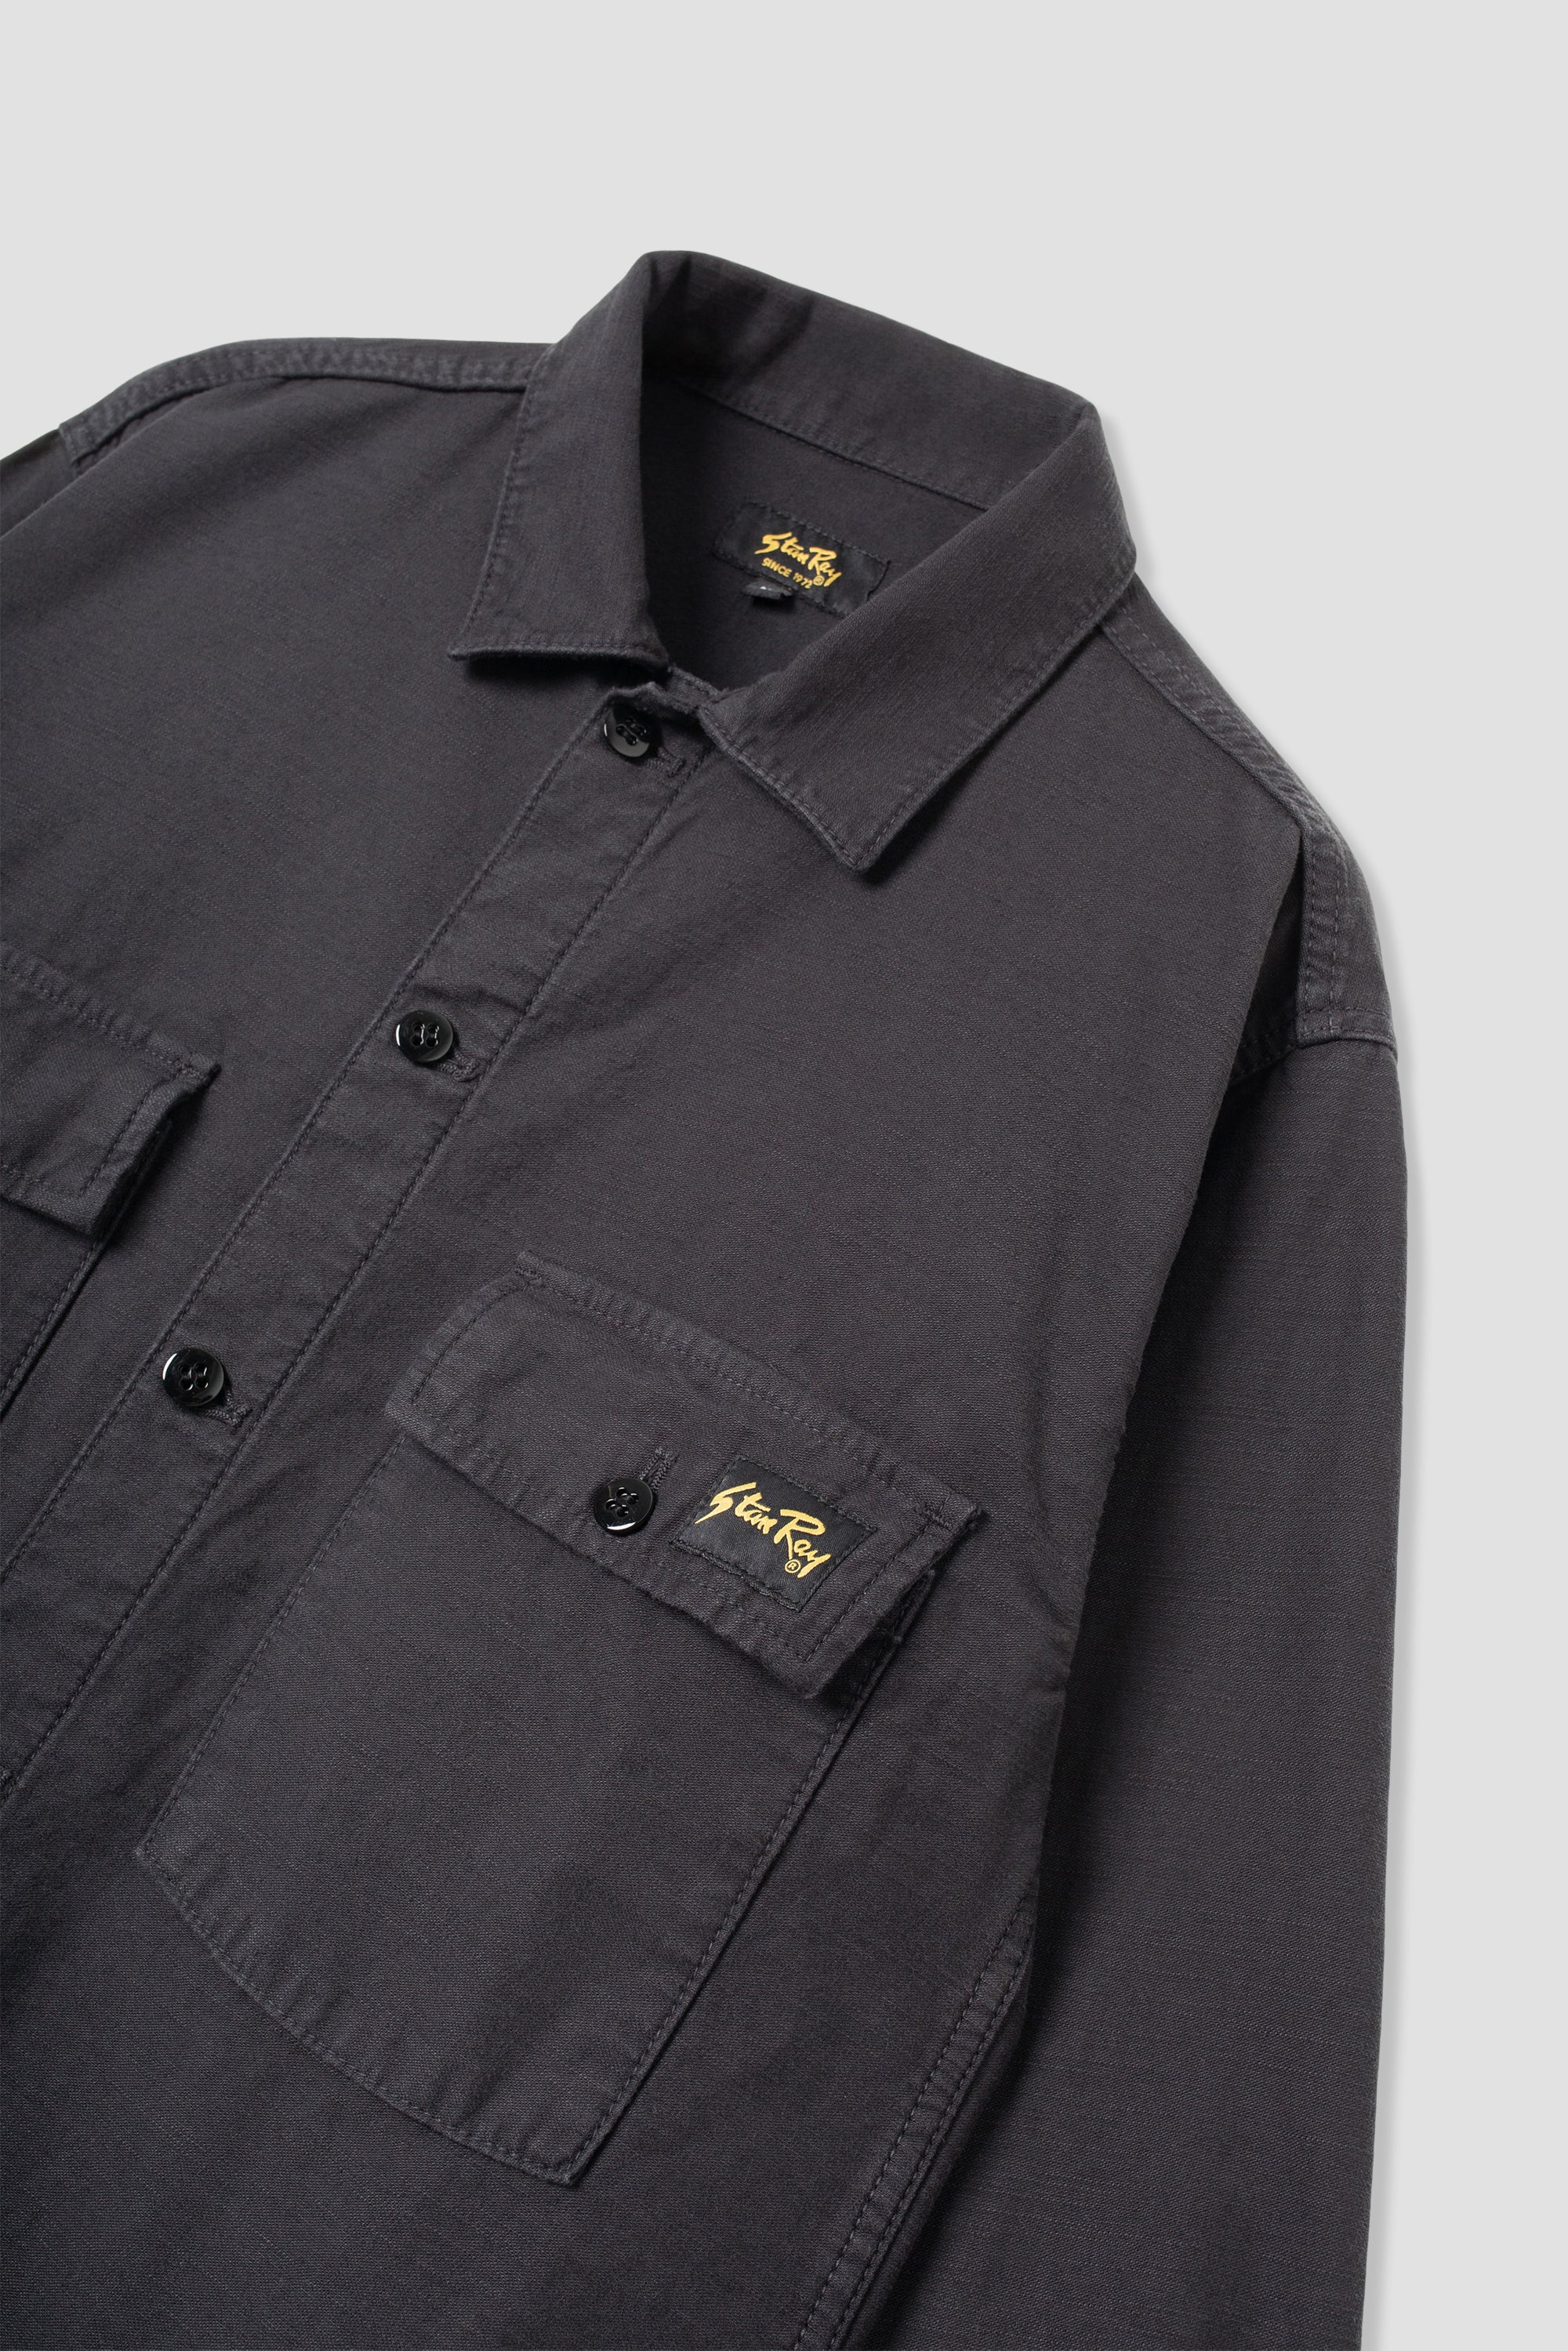 CPO Shirt (Black Sateen) – Stan Ray